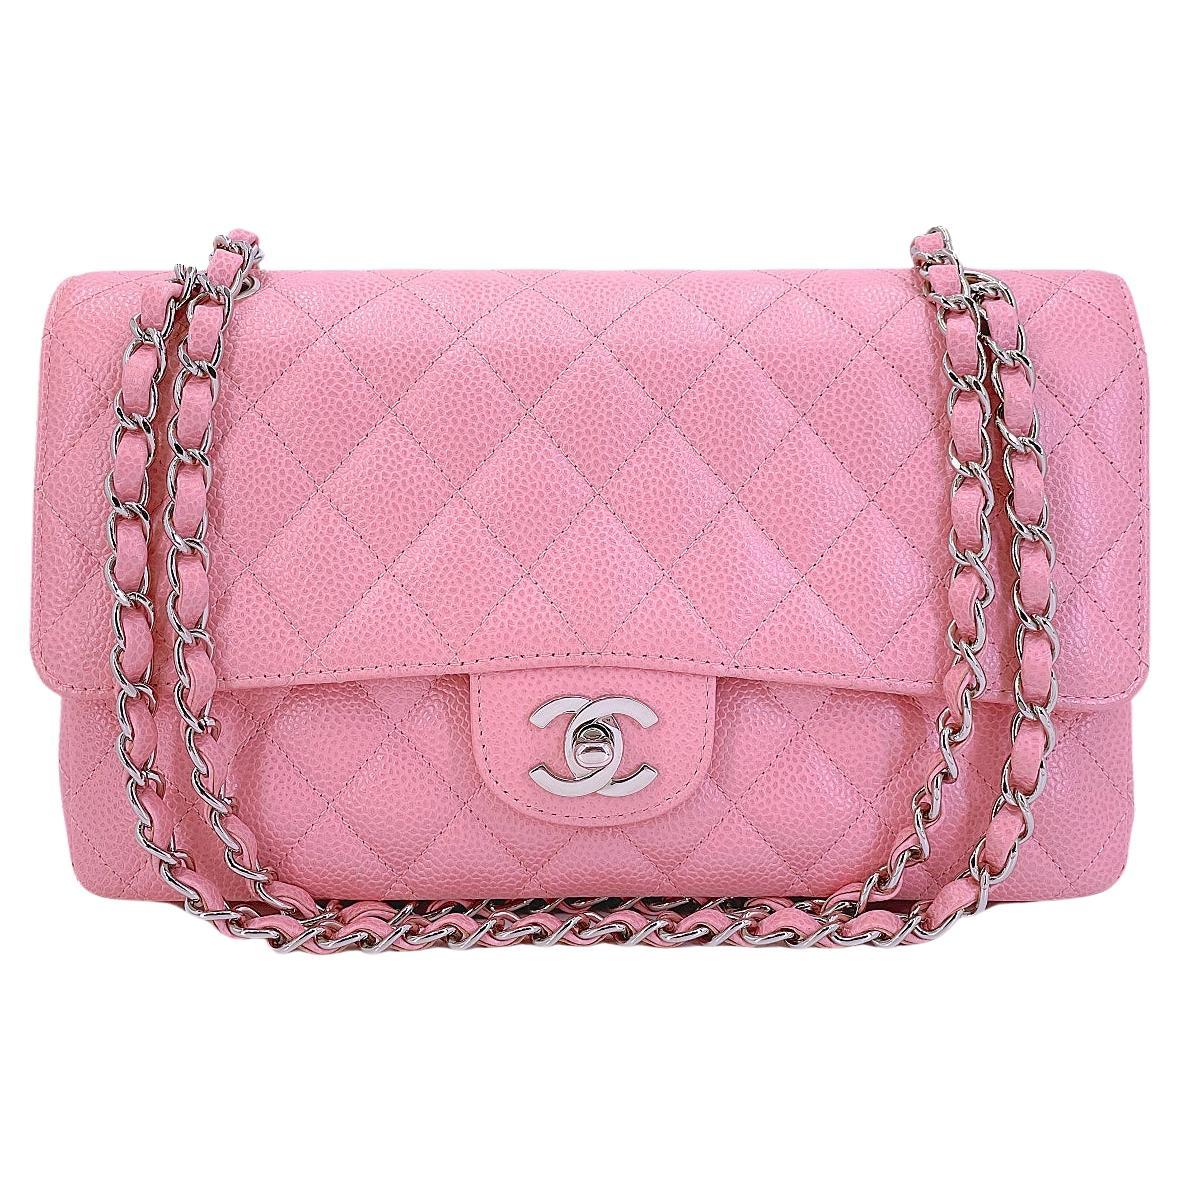 Chanel 2004 Sakura Pink Caviar Medium Classic Double Flap Bag SHW  67868 For Sale